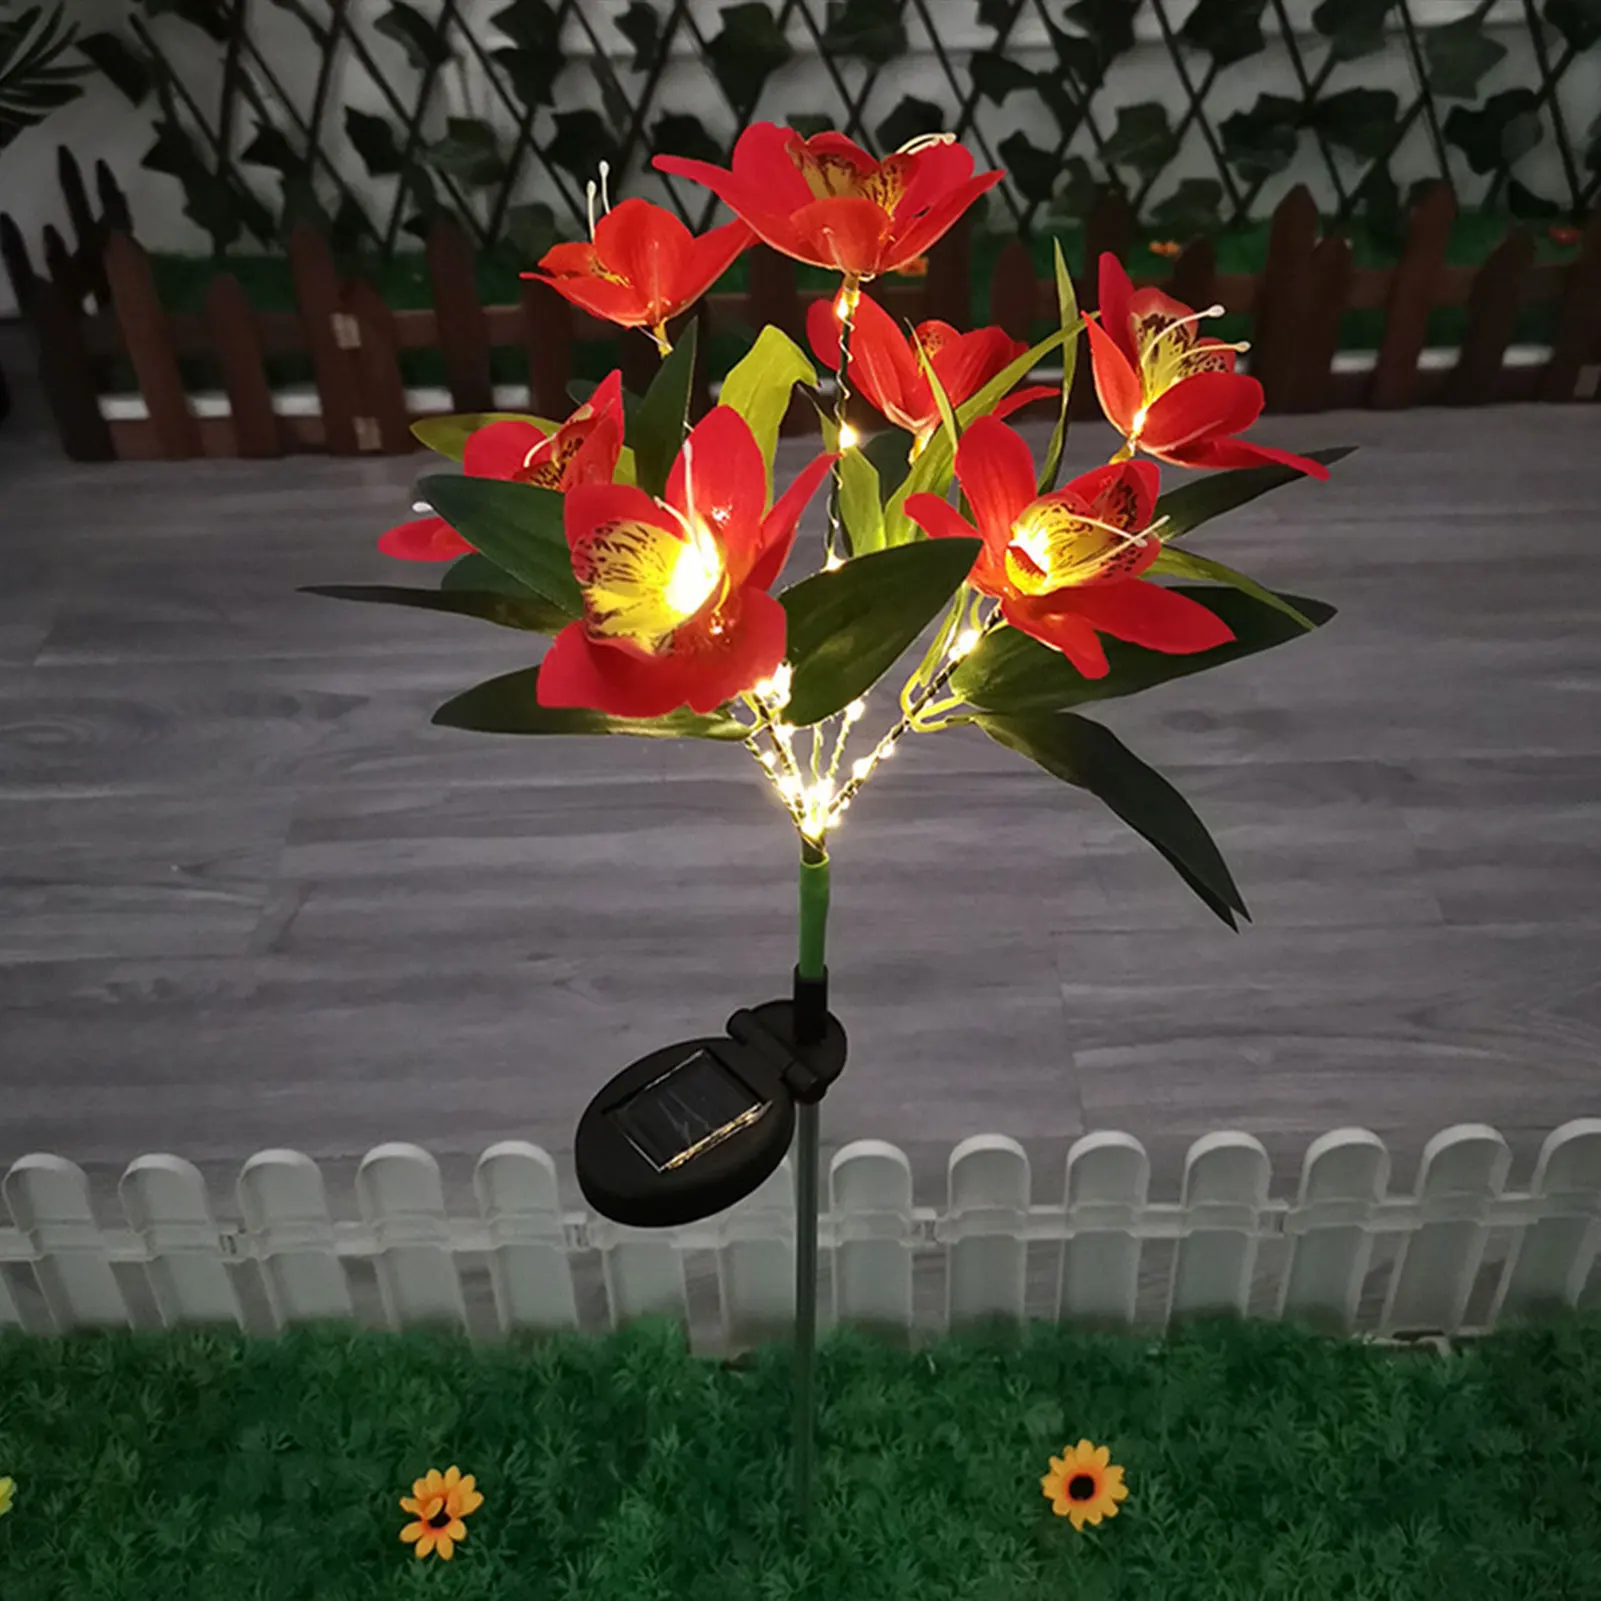 Decorative Lights Illuminate Lawn Patio Soft Landscape Light Solar Lamps Create Romantic Atmosphere Solar Garden Lights Orchid images - 6